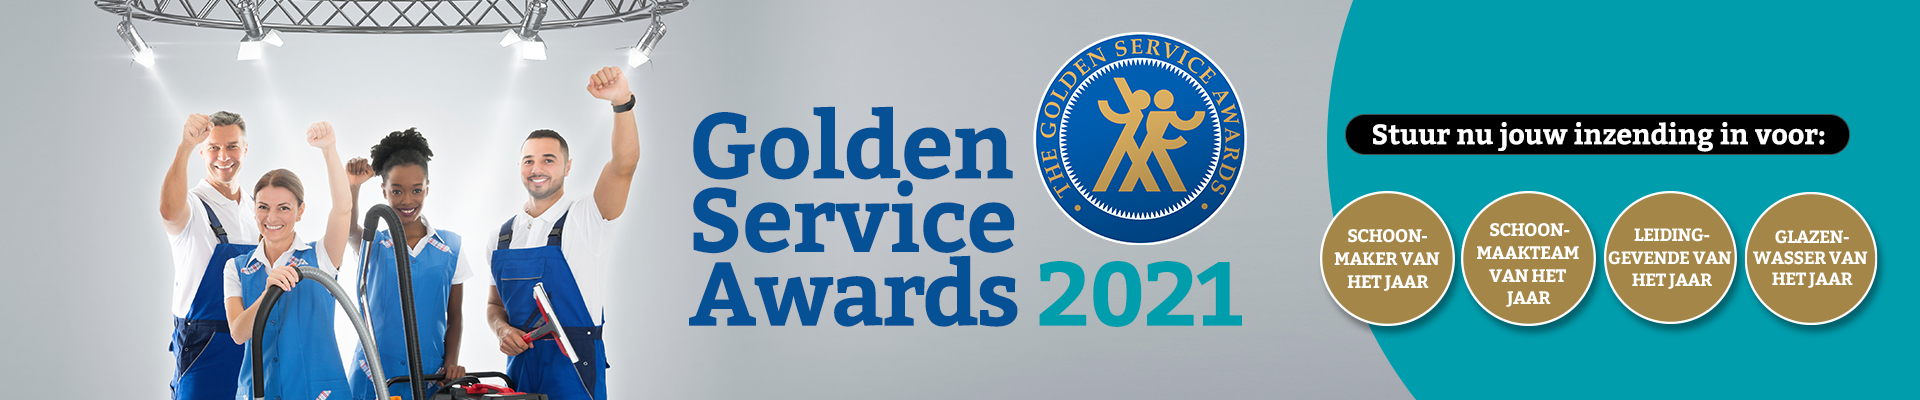 Golden Service Awards 2021